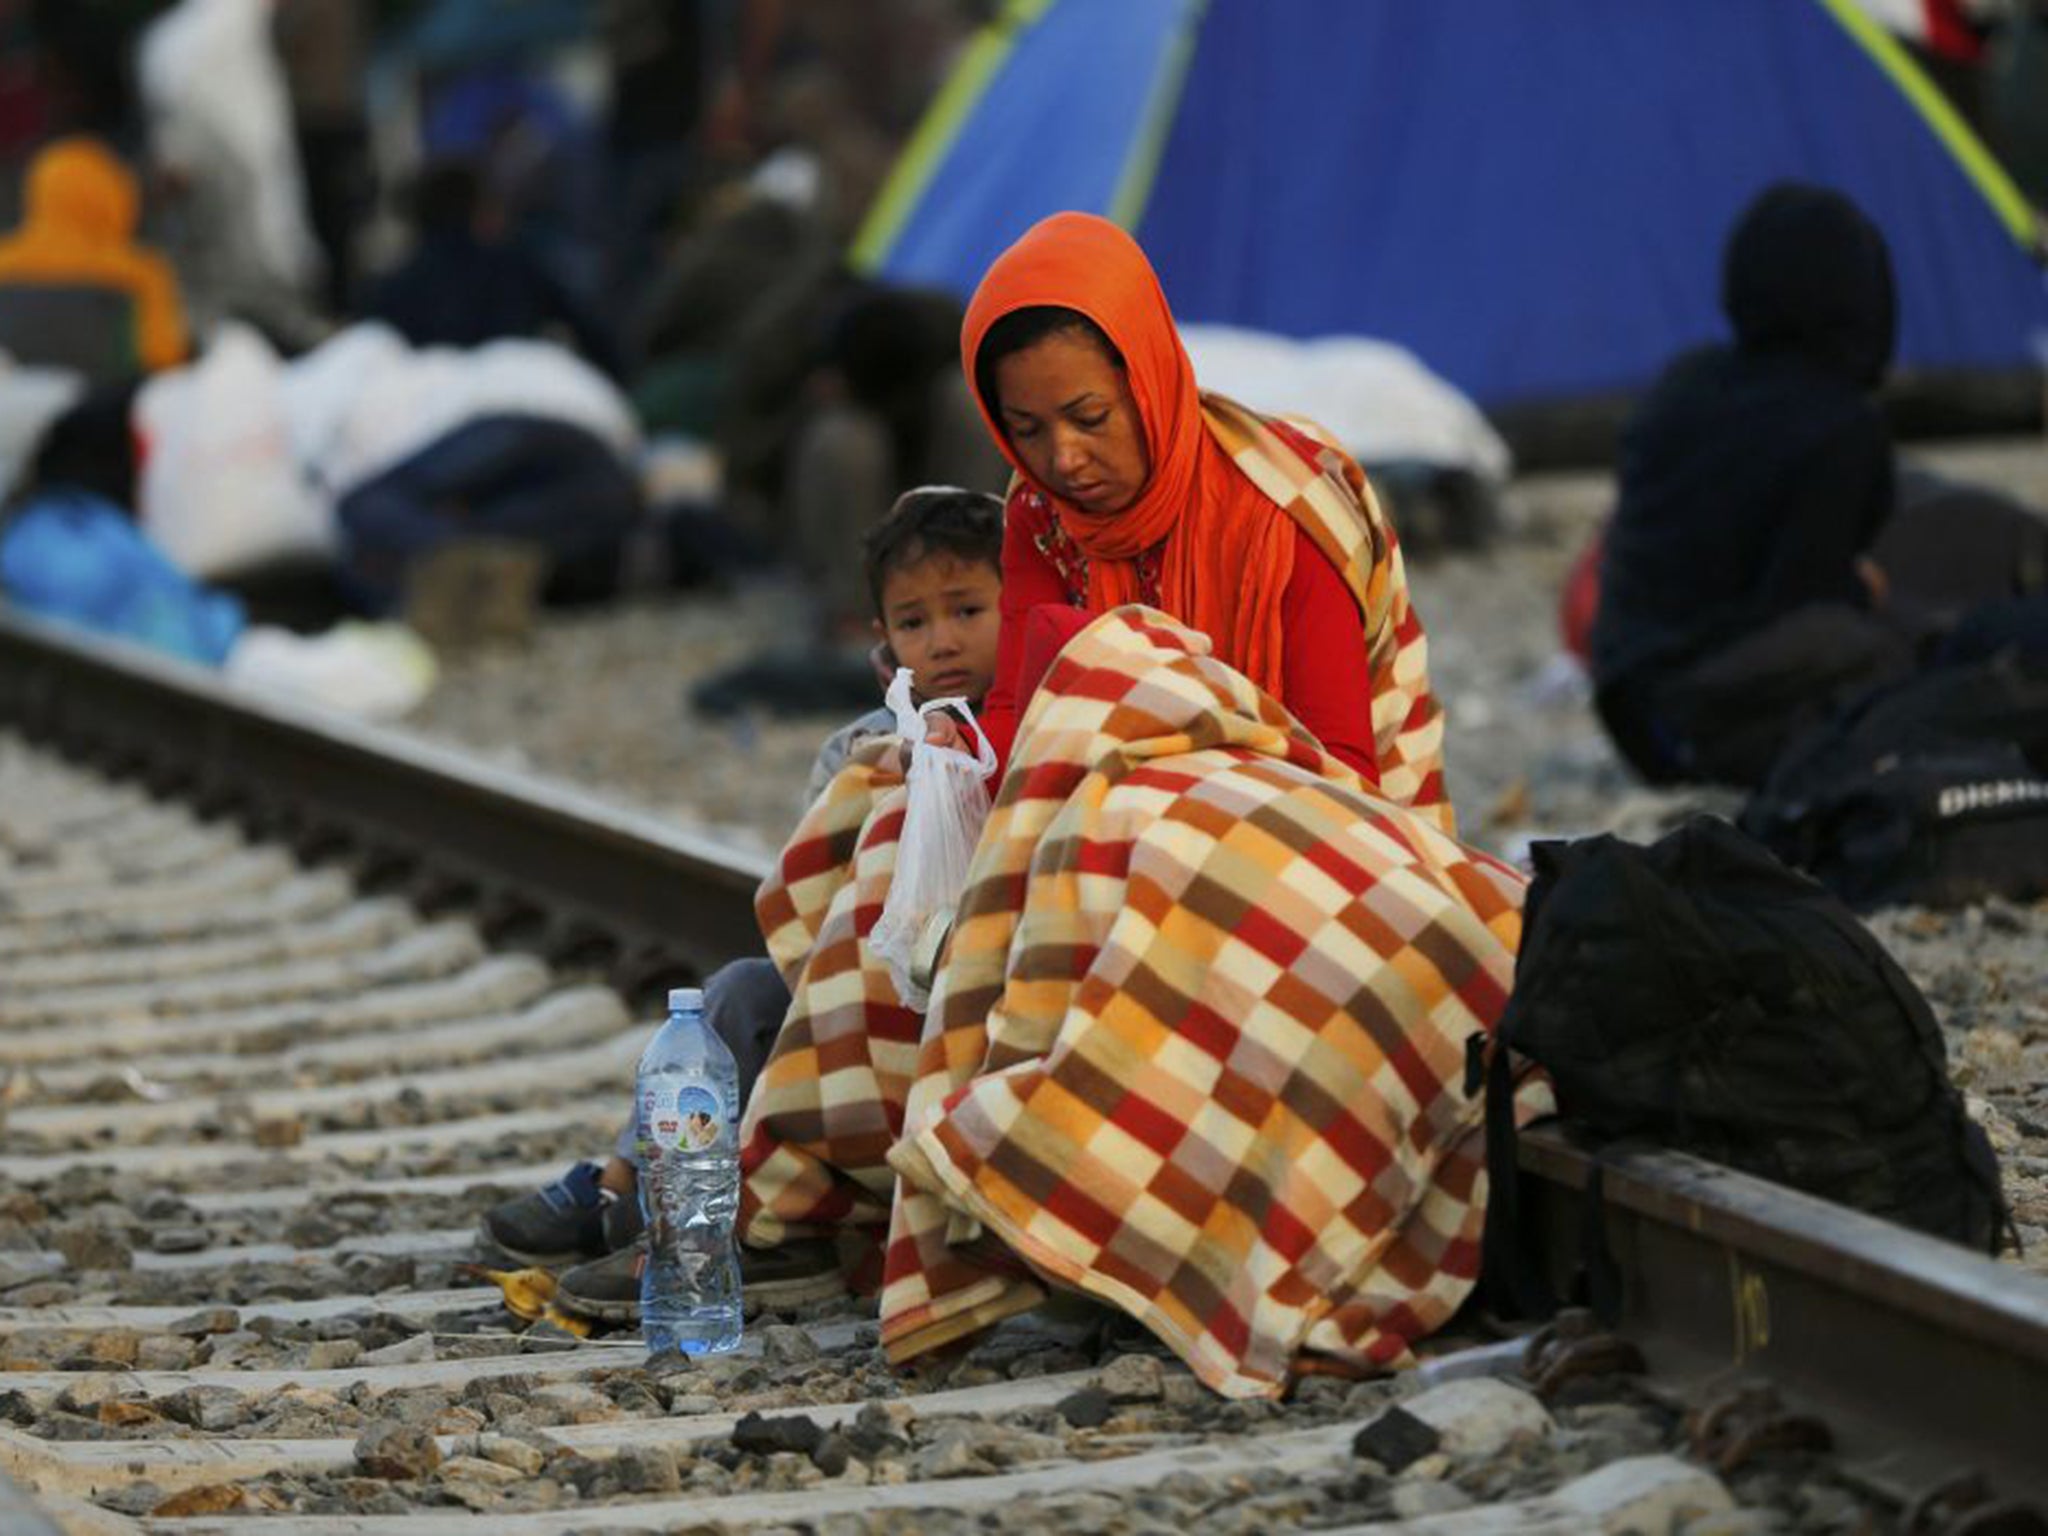 The refugee crisis still divides readers